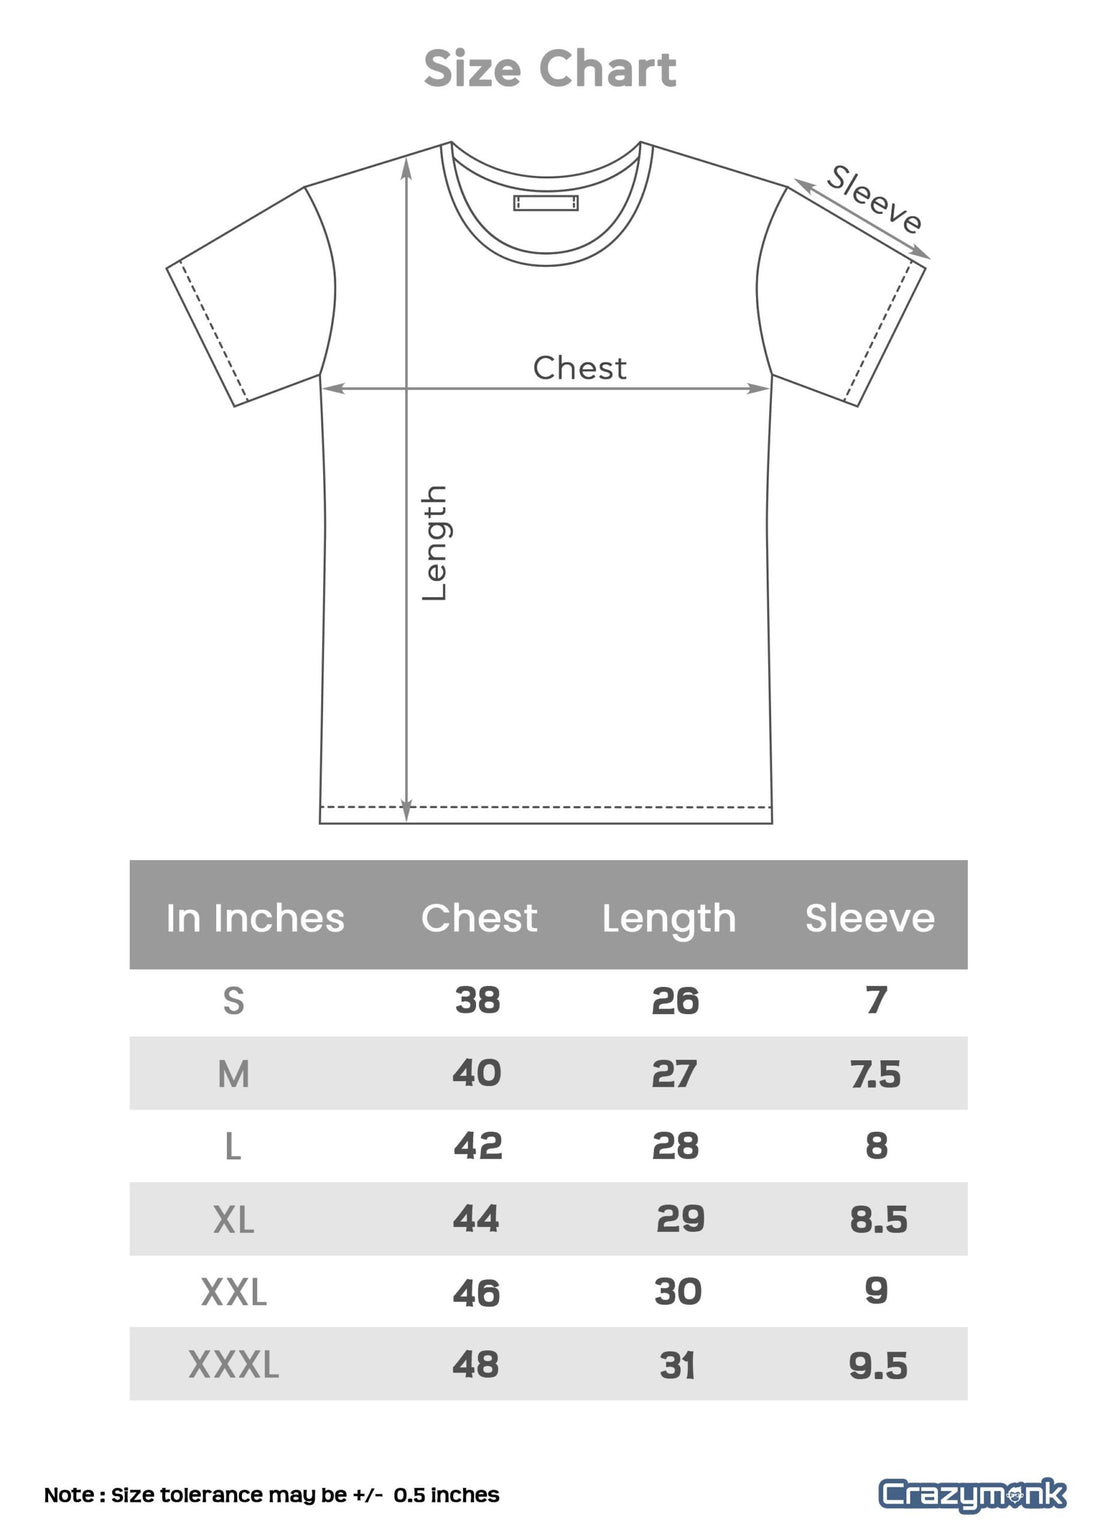 Sudo rm -rf / Unisex T-Shirt